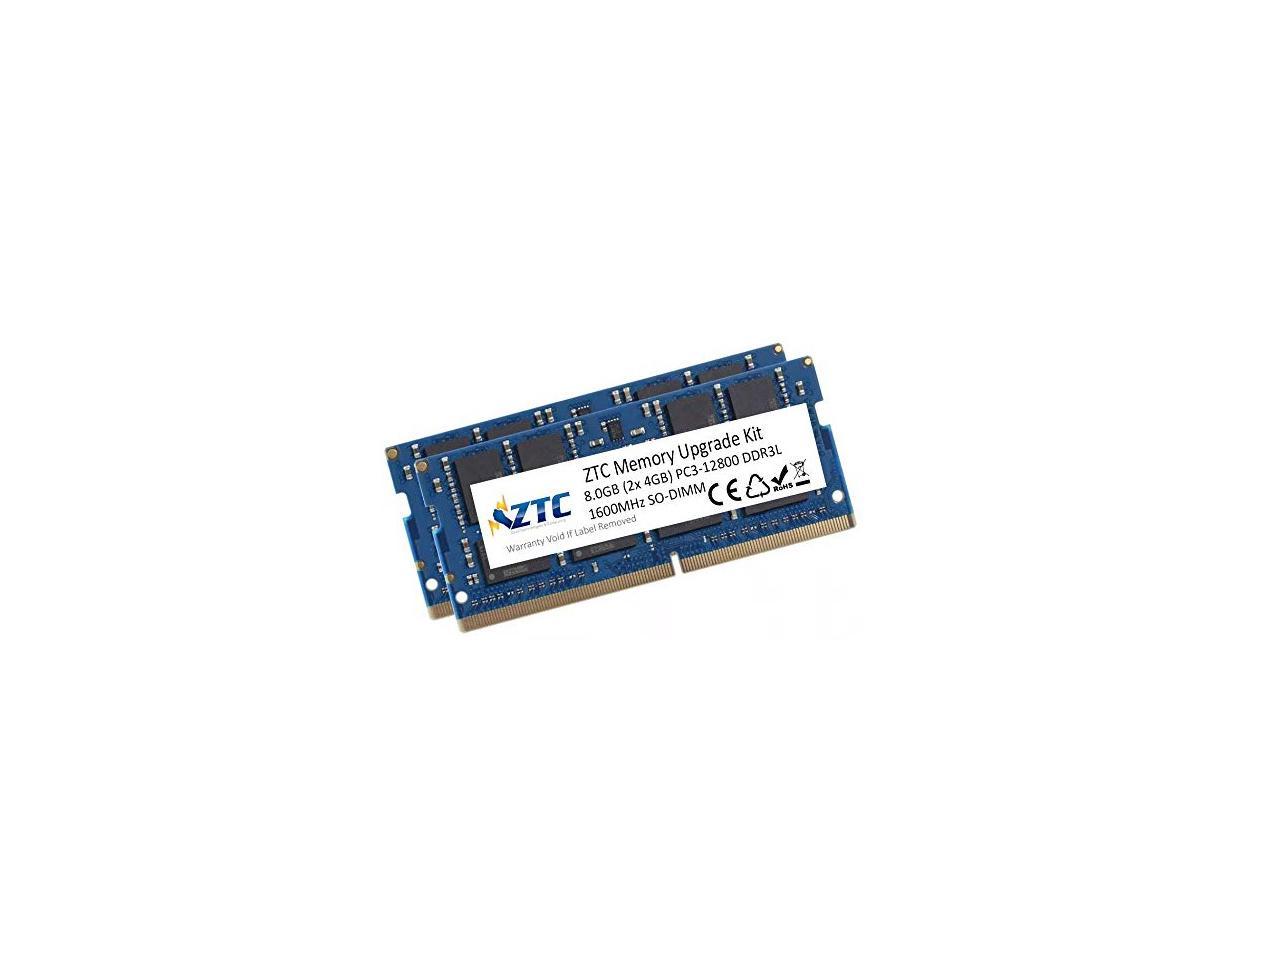 8.0GB (2X 4GB) PC3-12800 DDR3L 1600MHz SO-DIMM 204 Pin CL11 Memory Upgrade Kit Model ZTC1600DDR3S08S